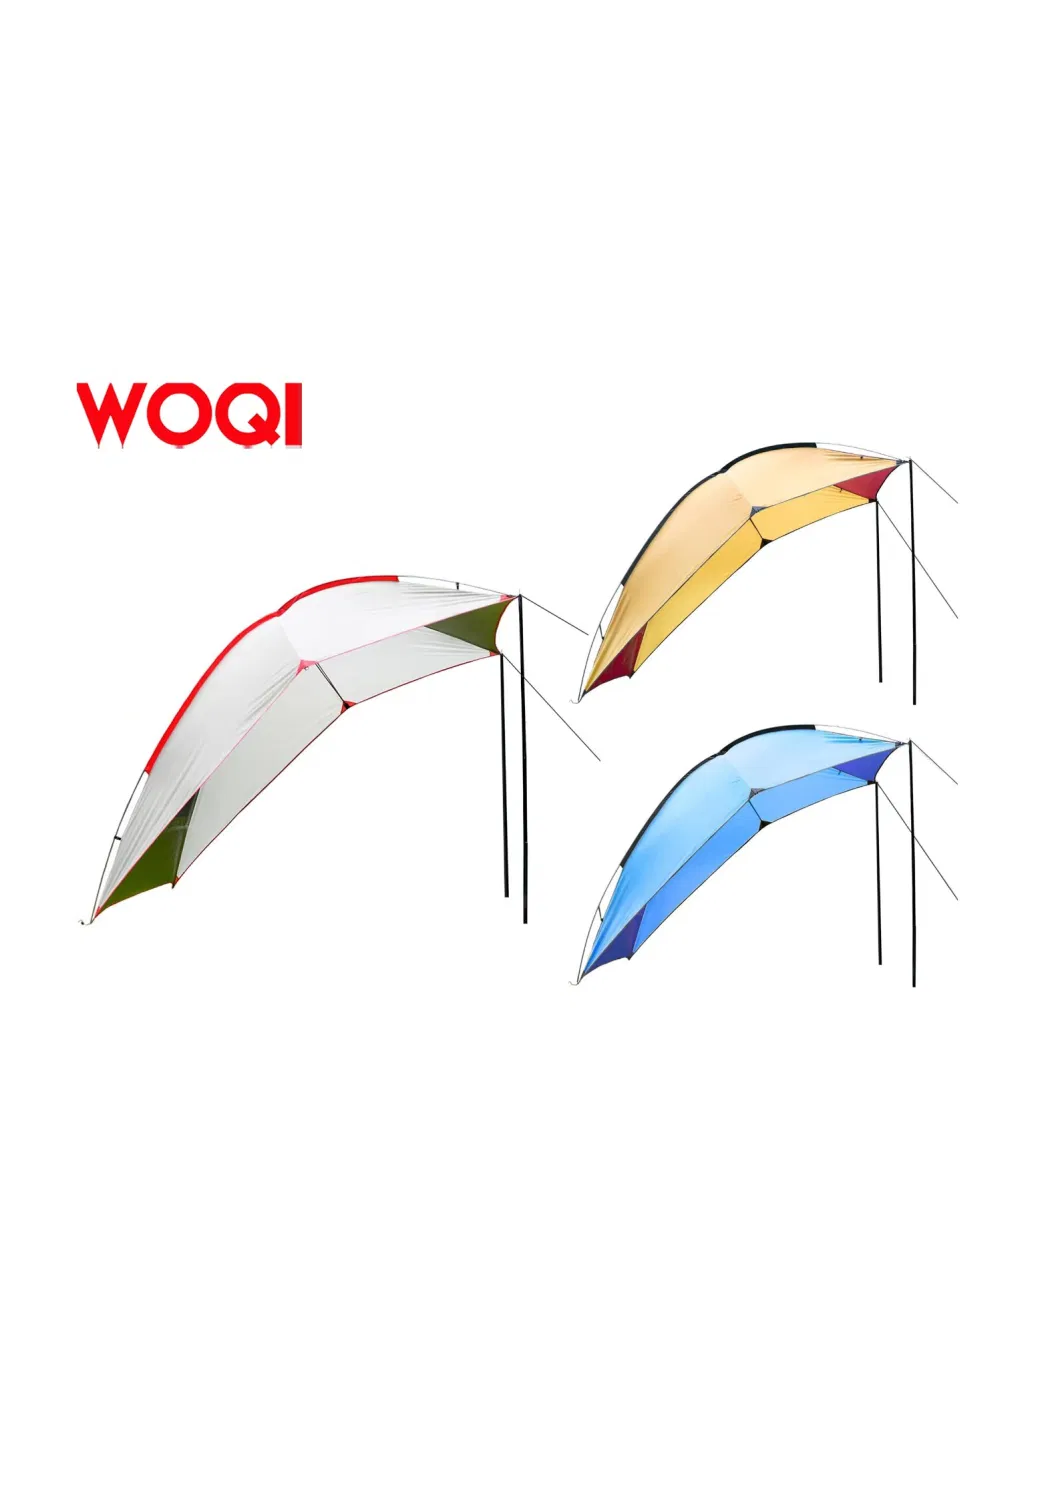 Woqi Upgrade Custom Colorful Waterproof Pop up Car Awning Sun Shelter